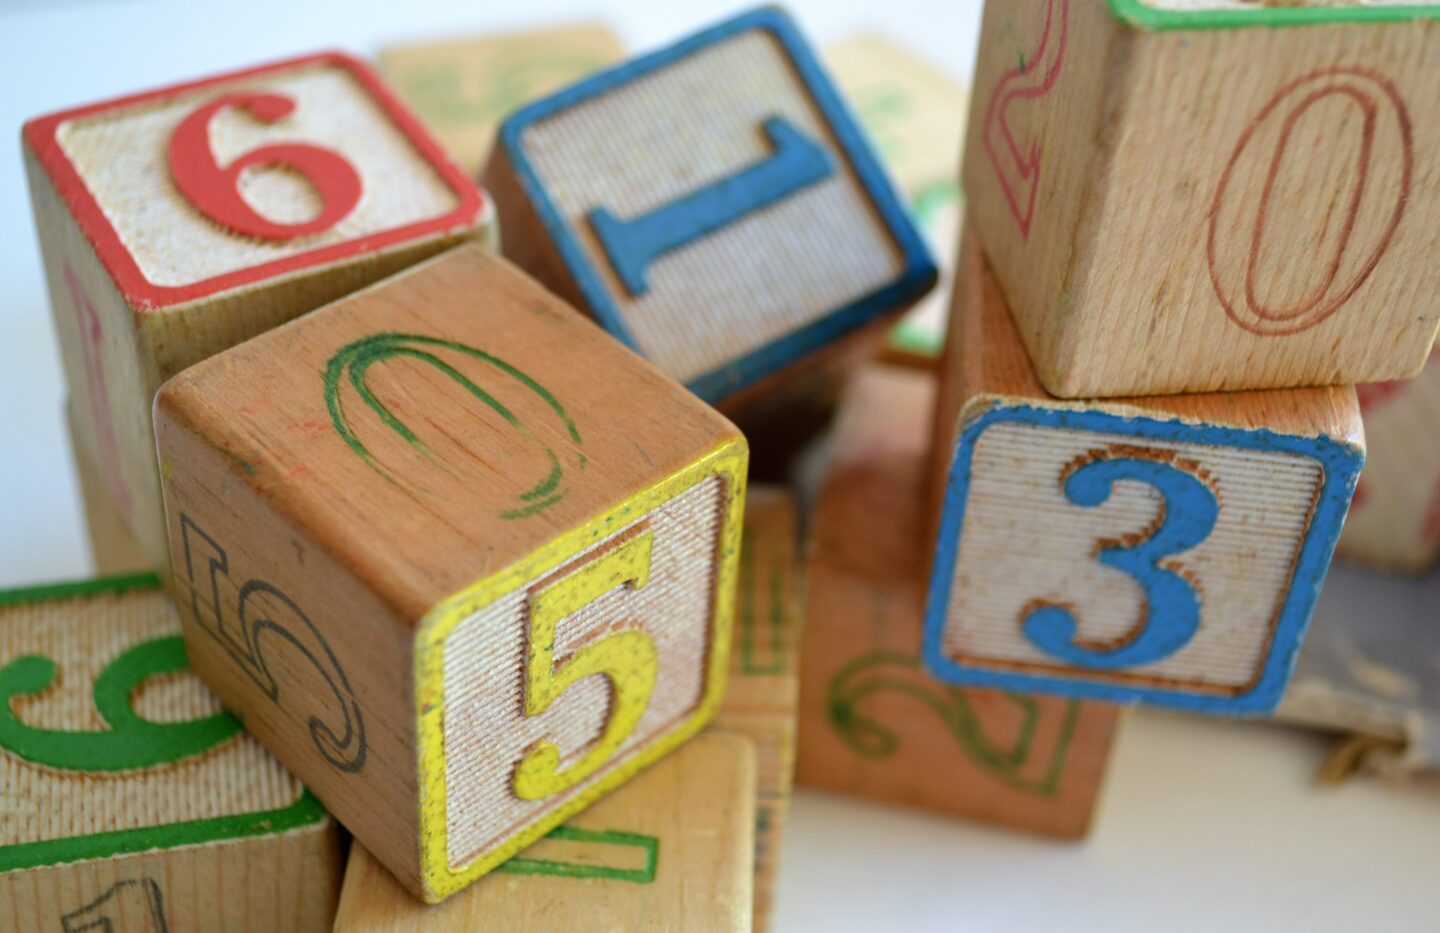 Wooden number blocks